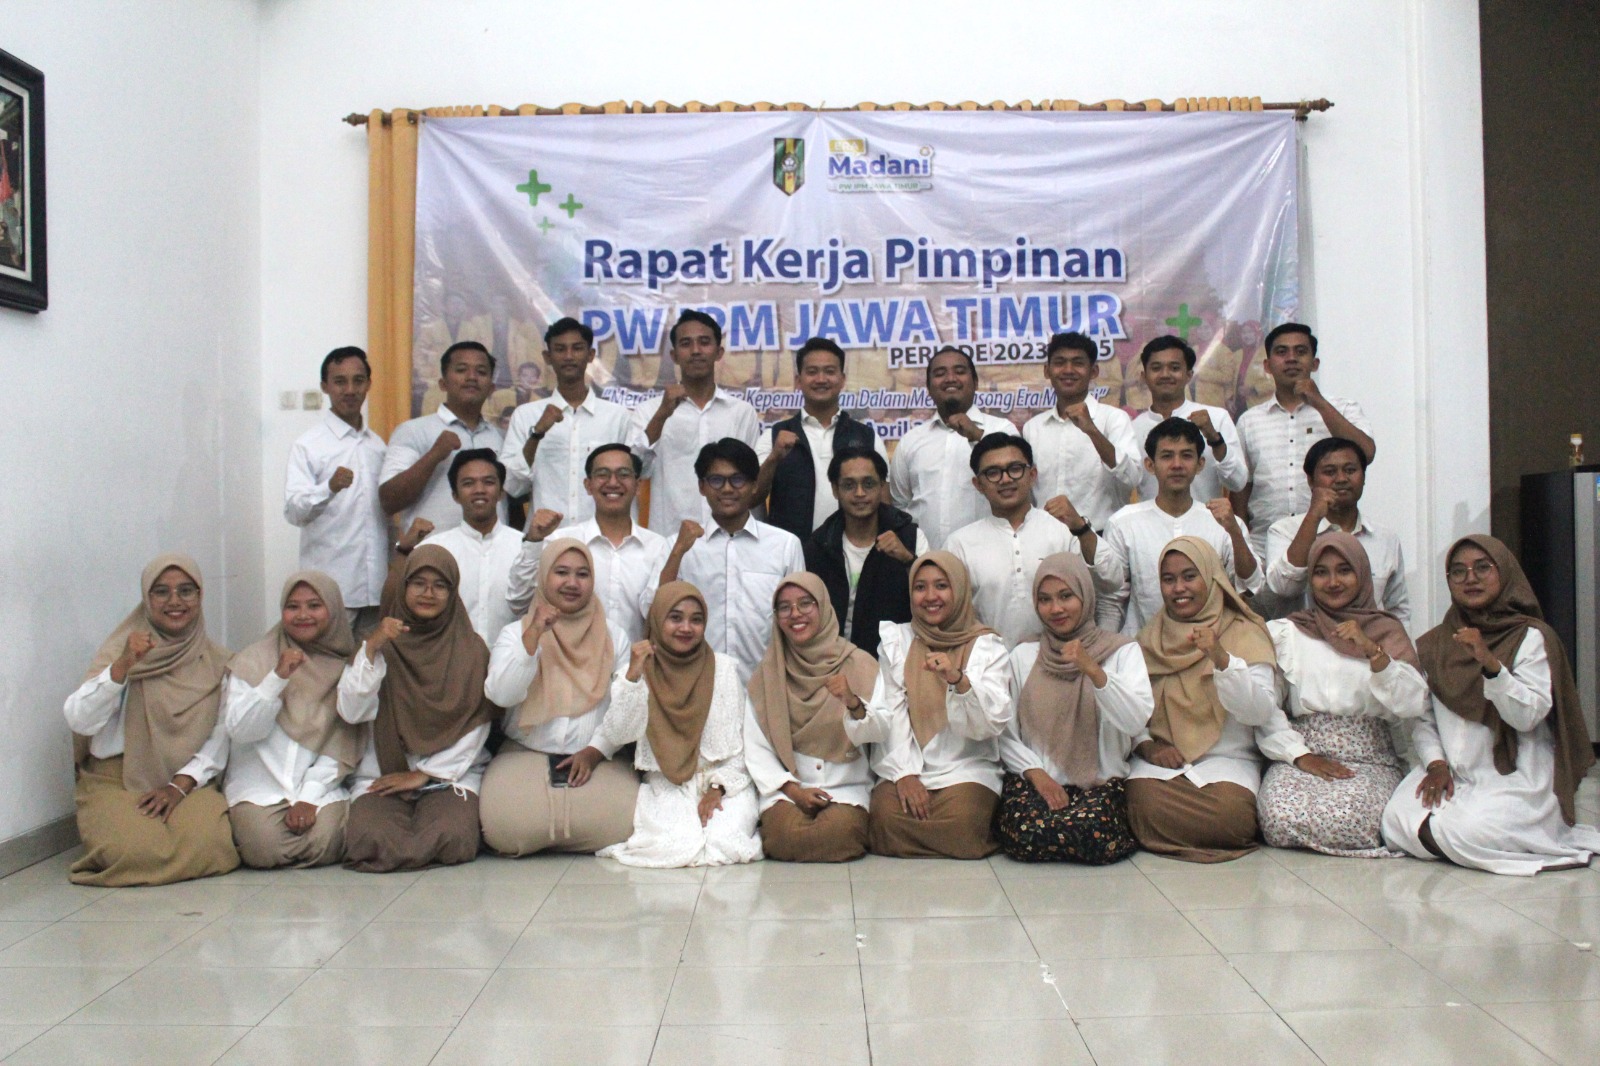 IPM Jawa Timur